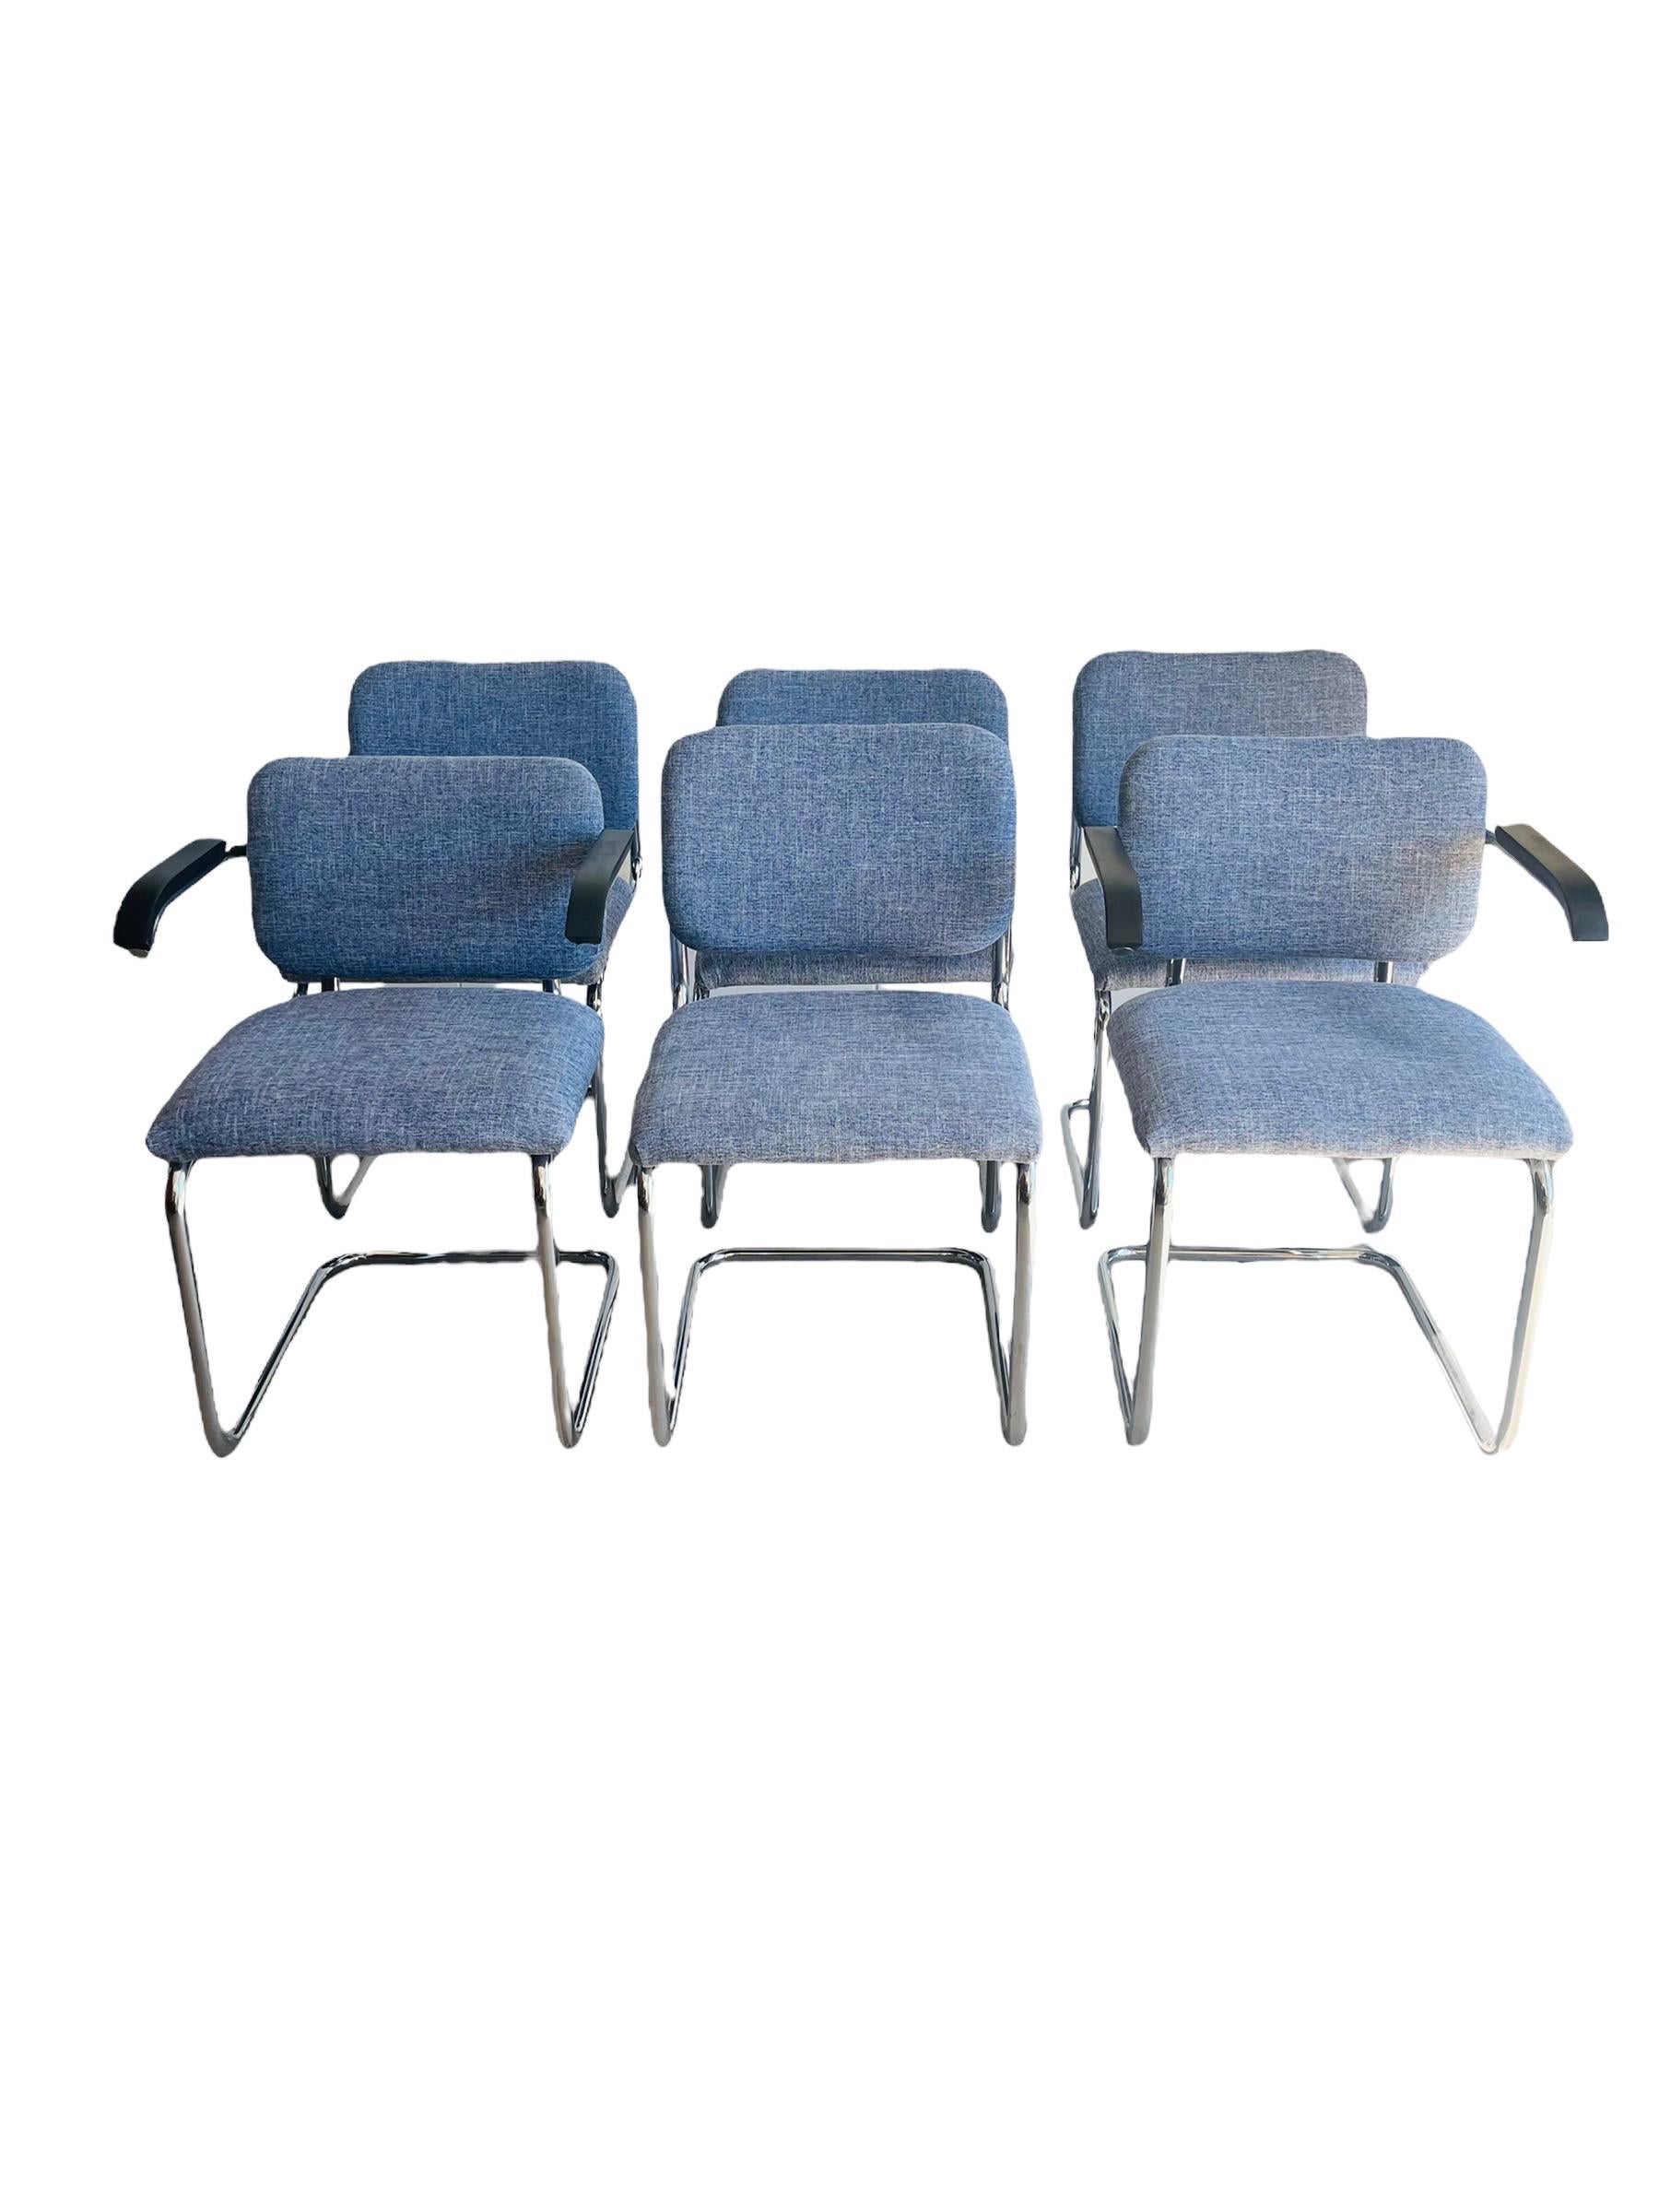 Mid-Century Italian Modern Marcel Breuer Cesca Dining Chairs  4